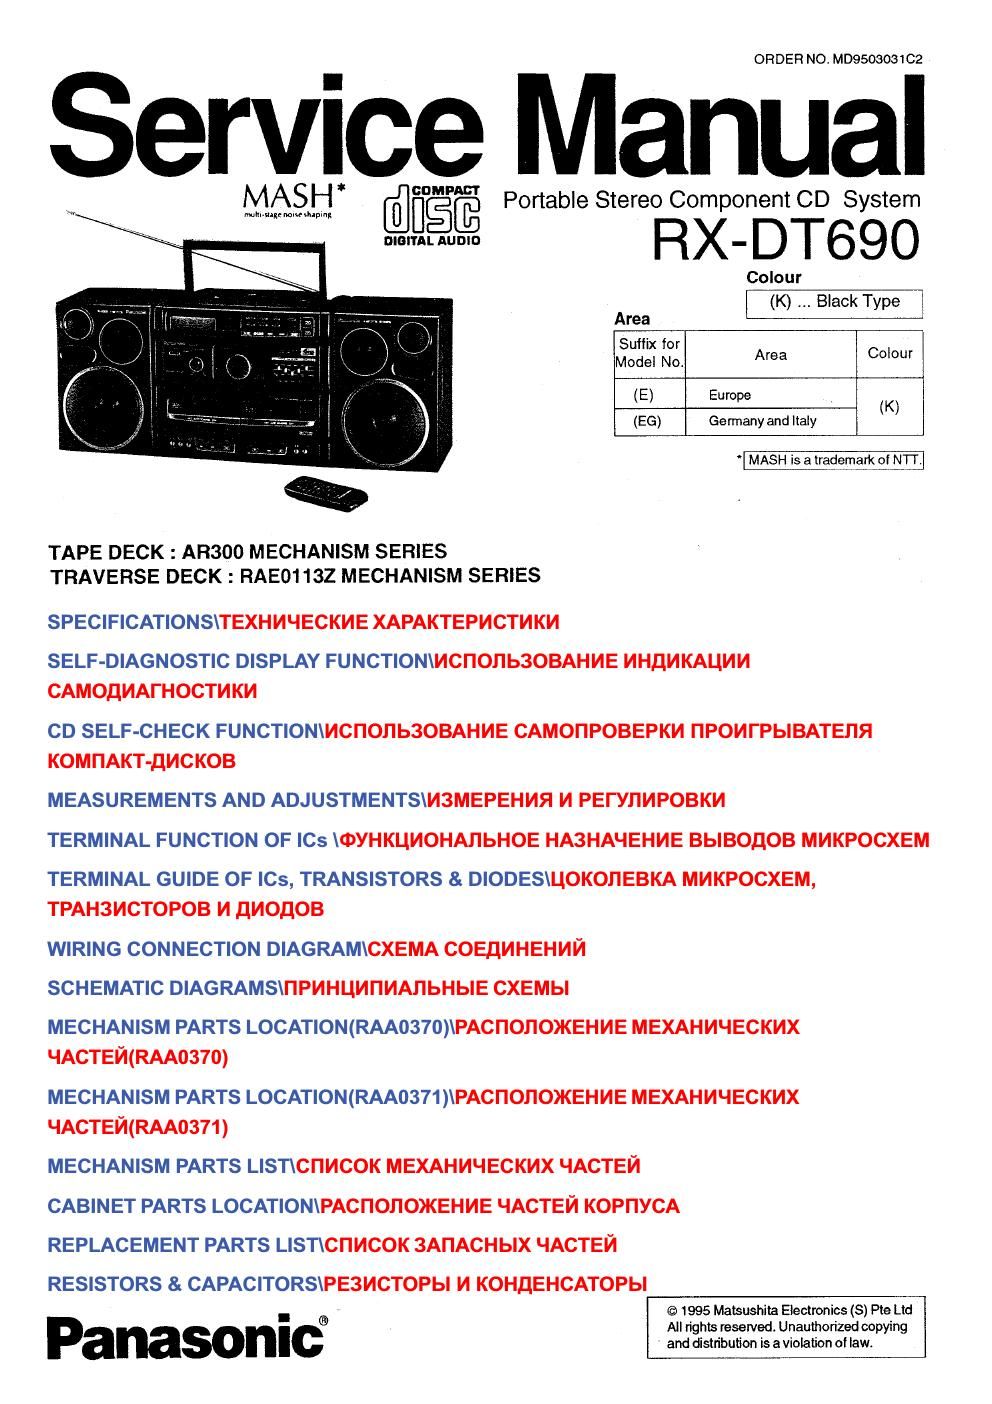 panasonic rx dt690 service manual